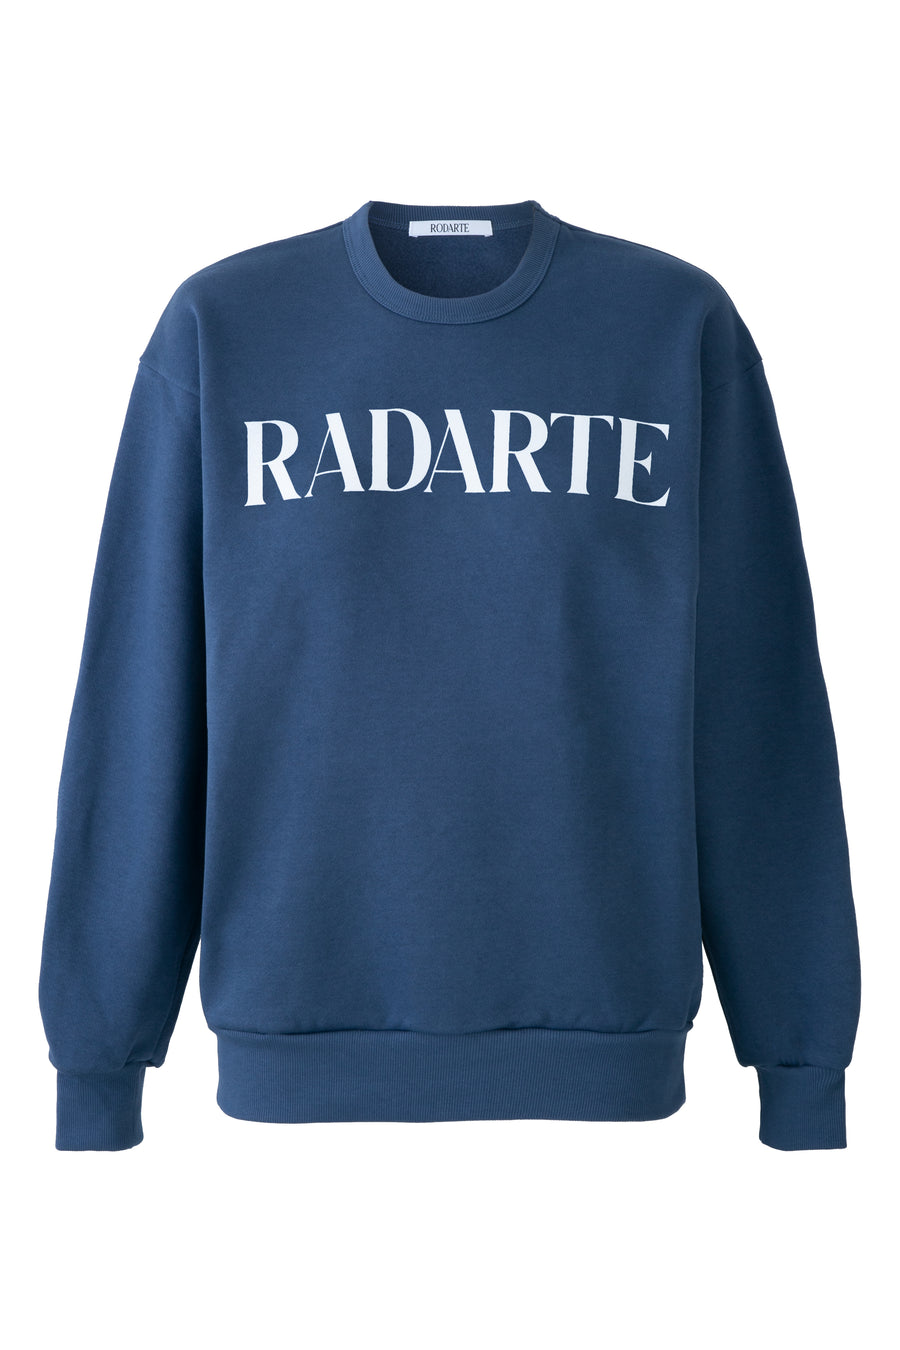 Radarte Crewneck Sweatshirt